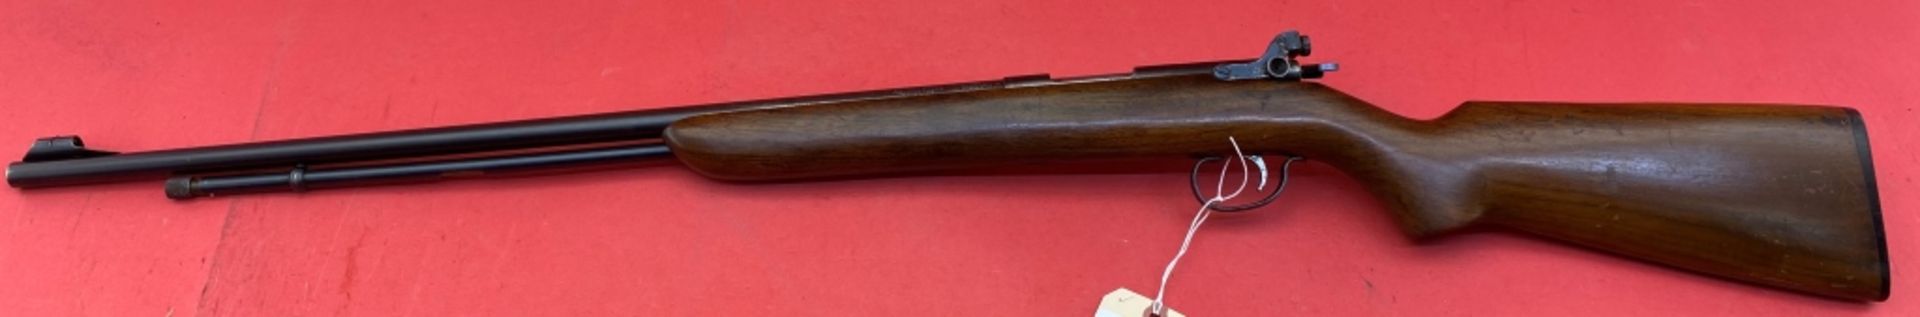 Remington 341P .22SLLR Rifle - Image 12 of 12